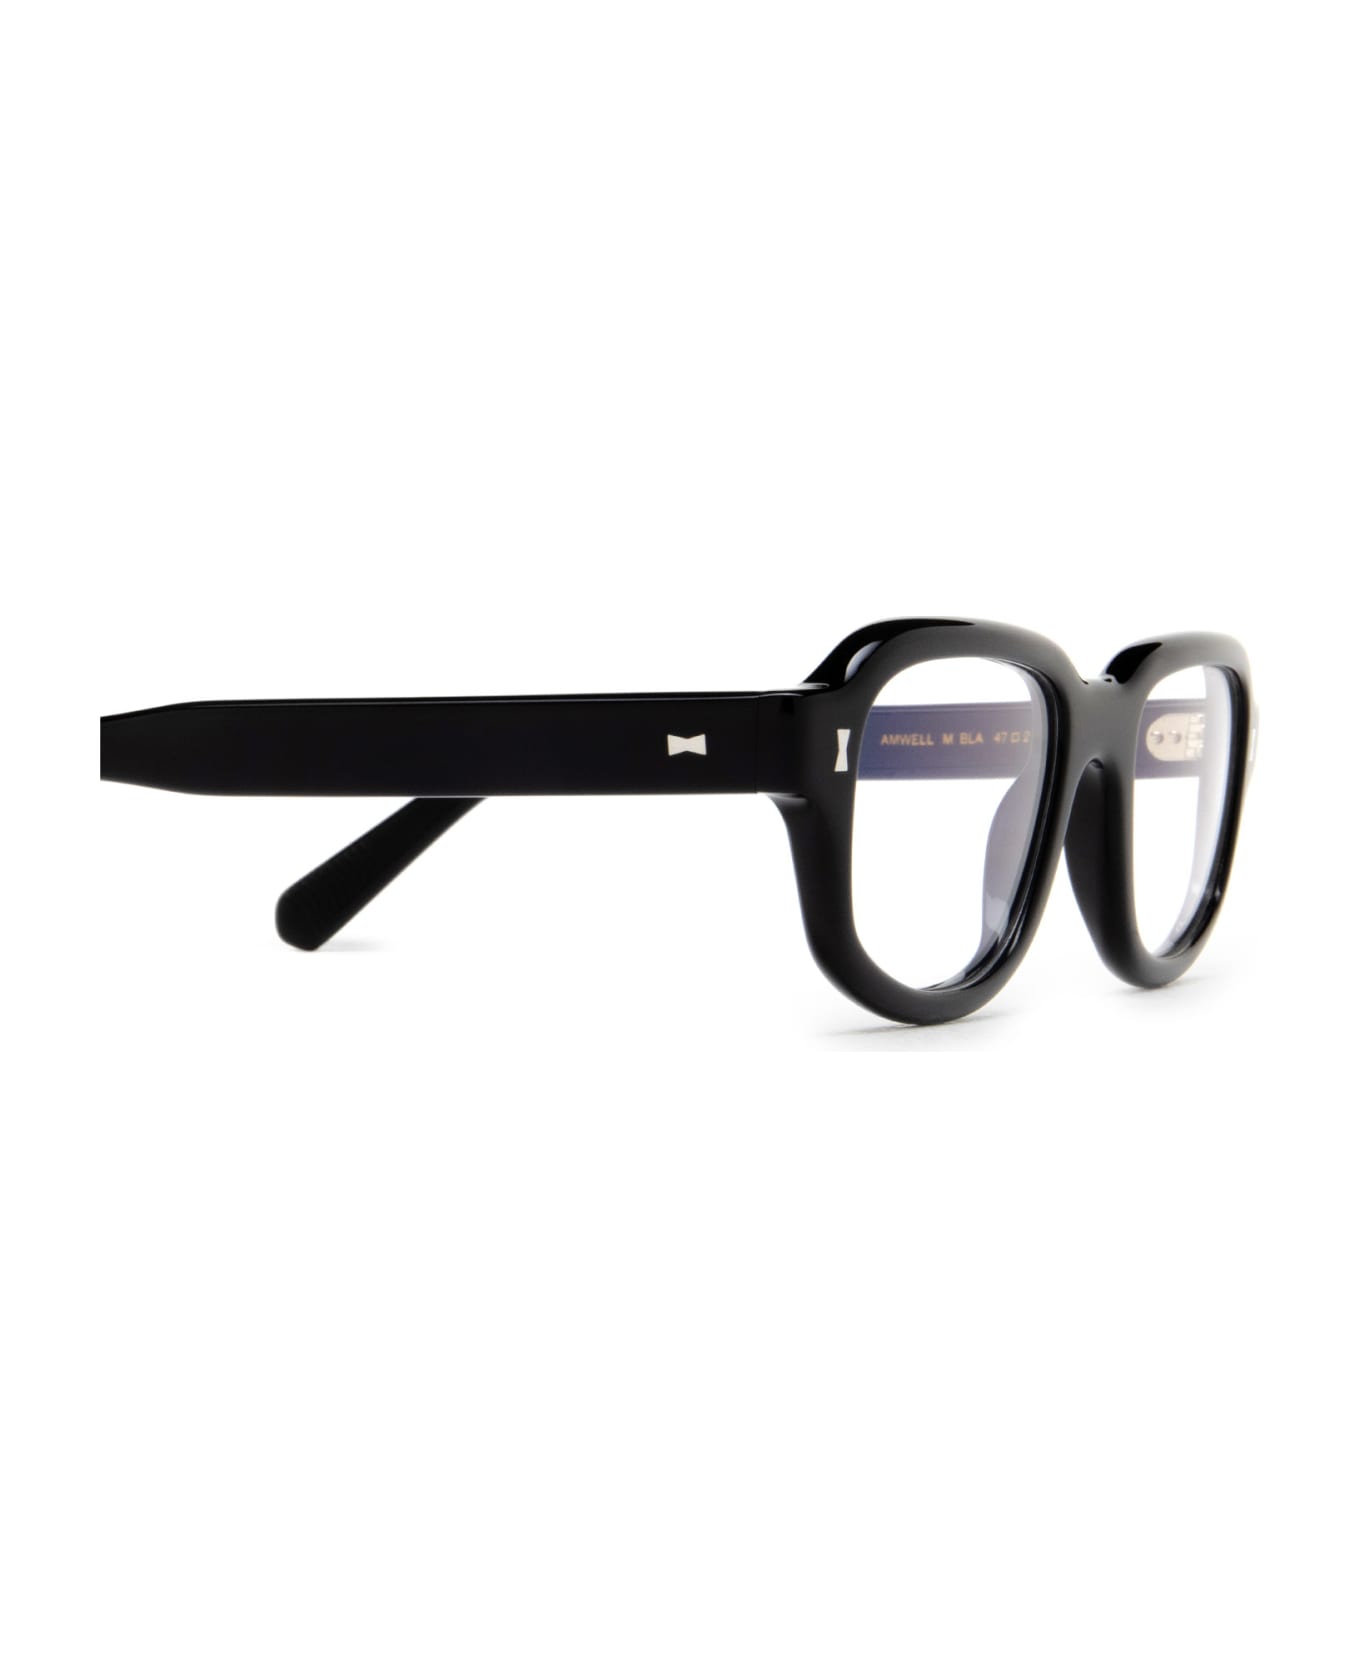 Cubitts Amwell Black Glasses - Black